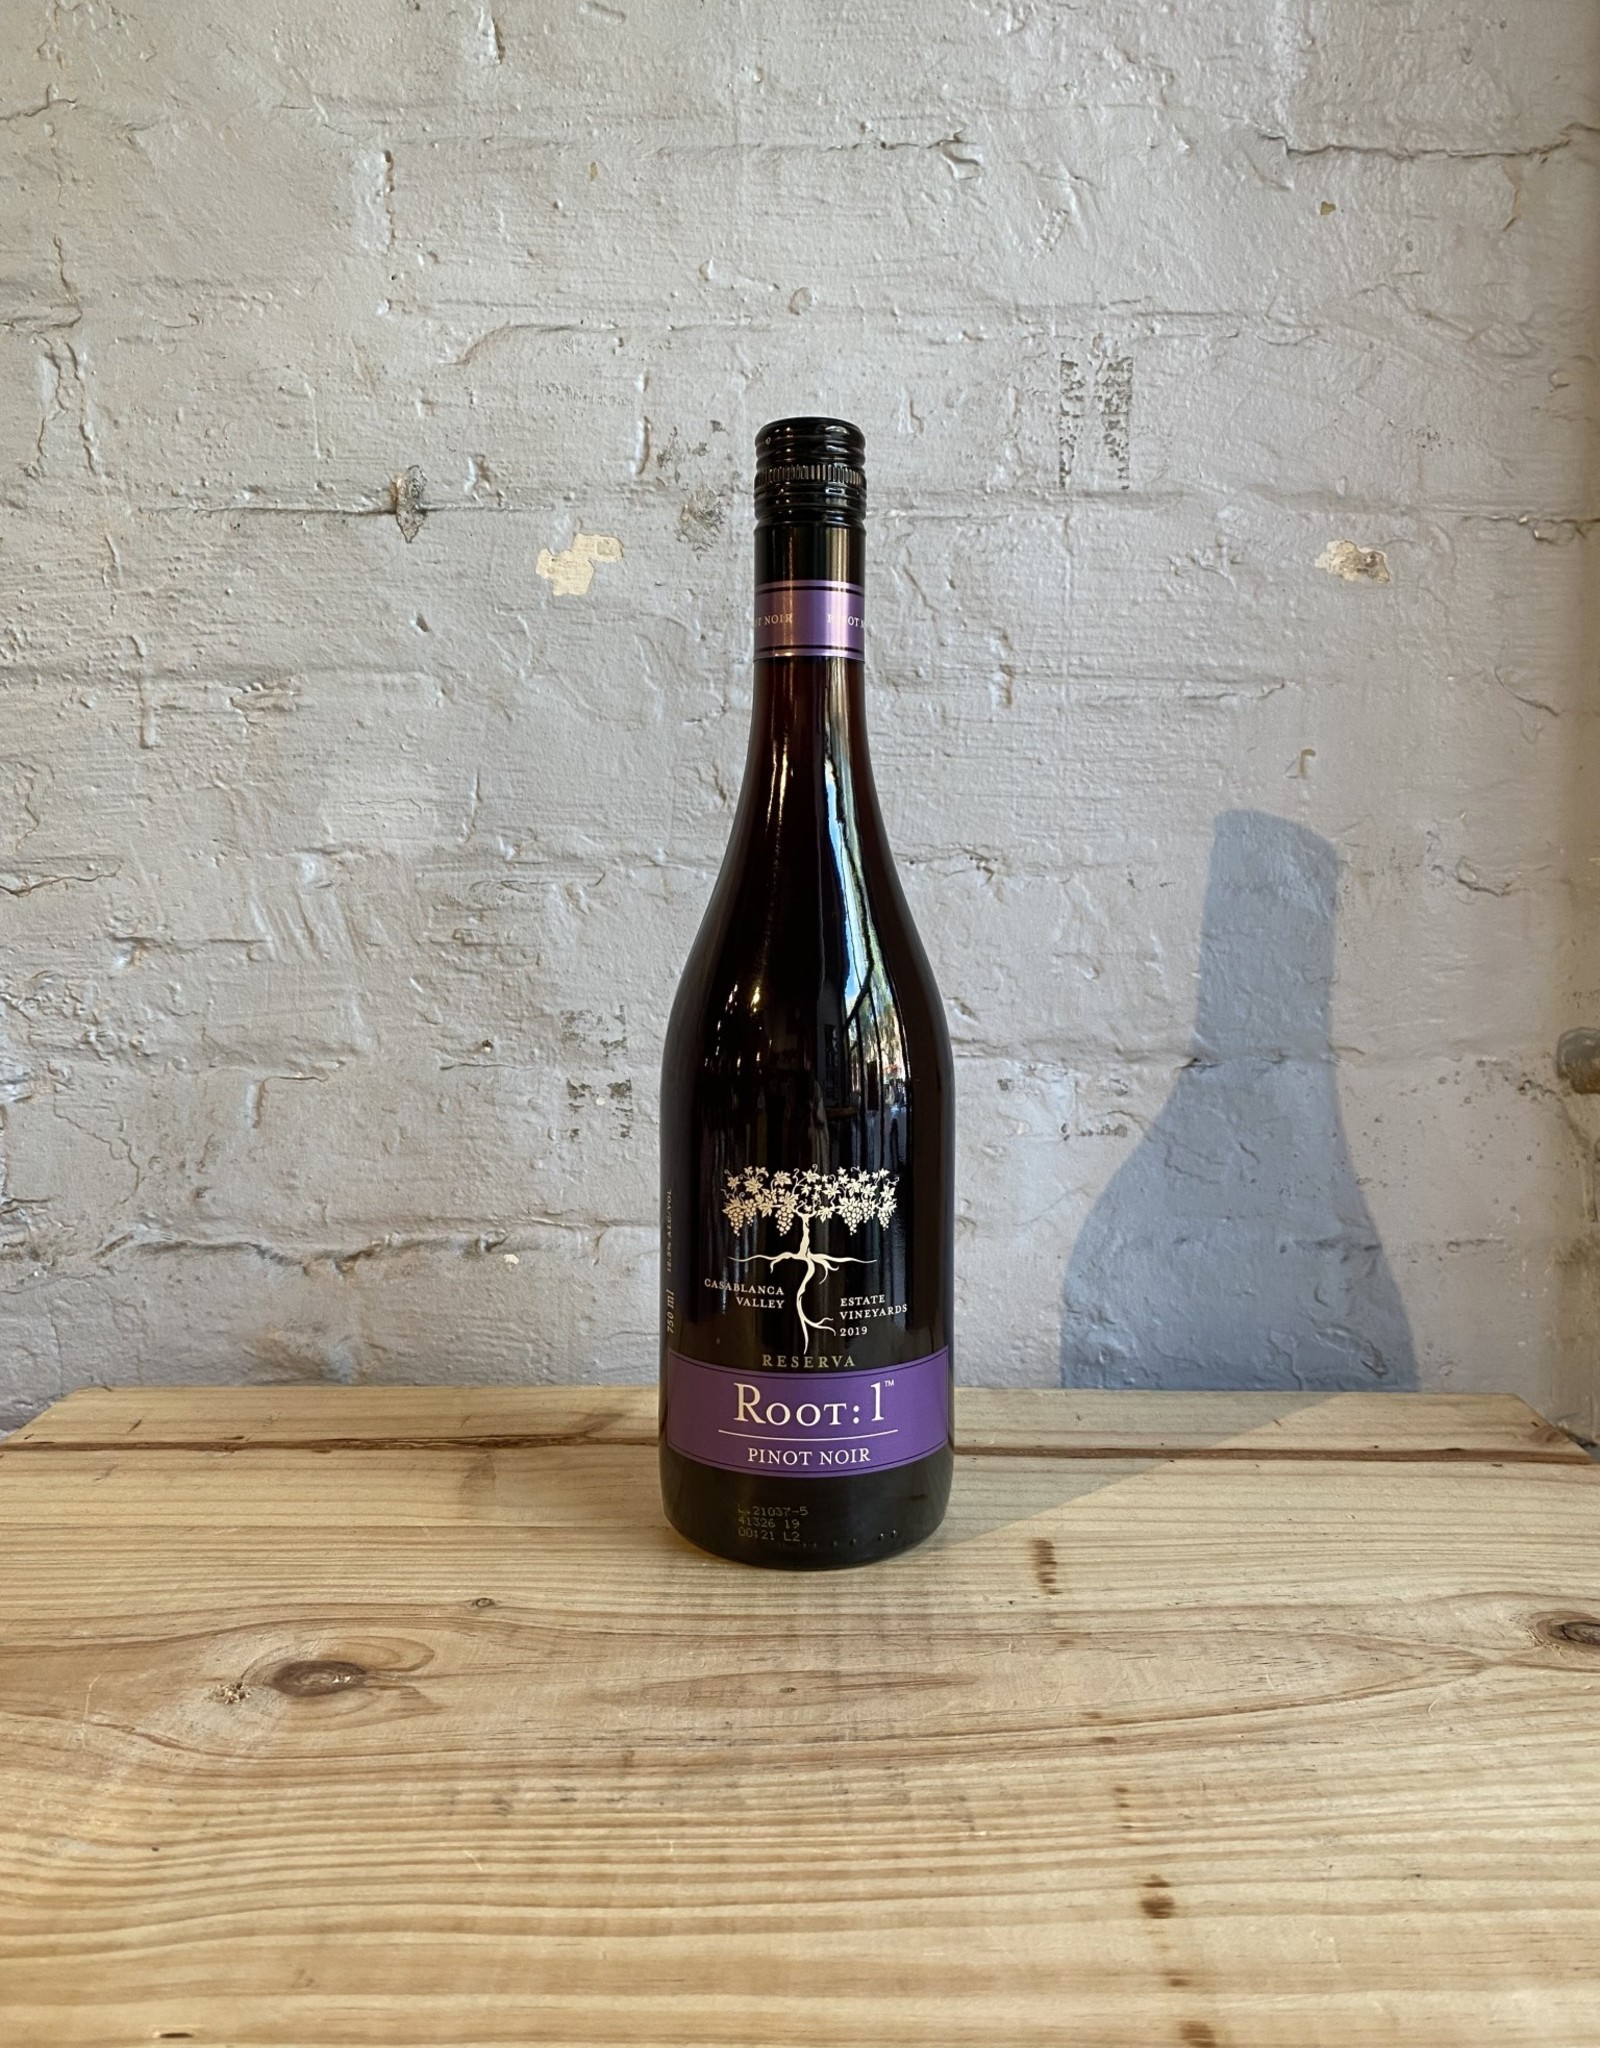 Wine 2019 Root: 1 Pinot Noir - Aconcagua, Chile (750ml)